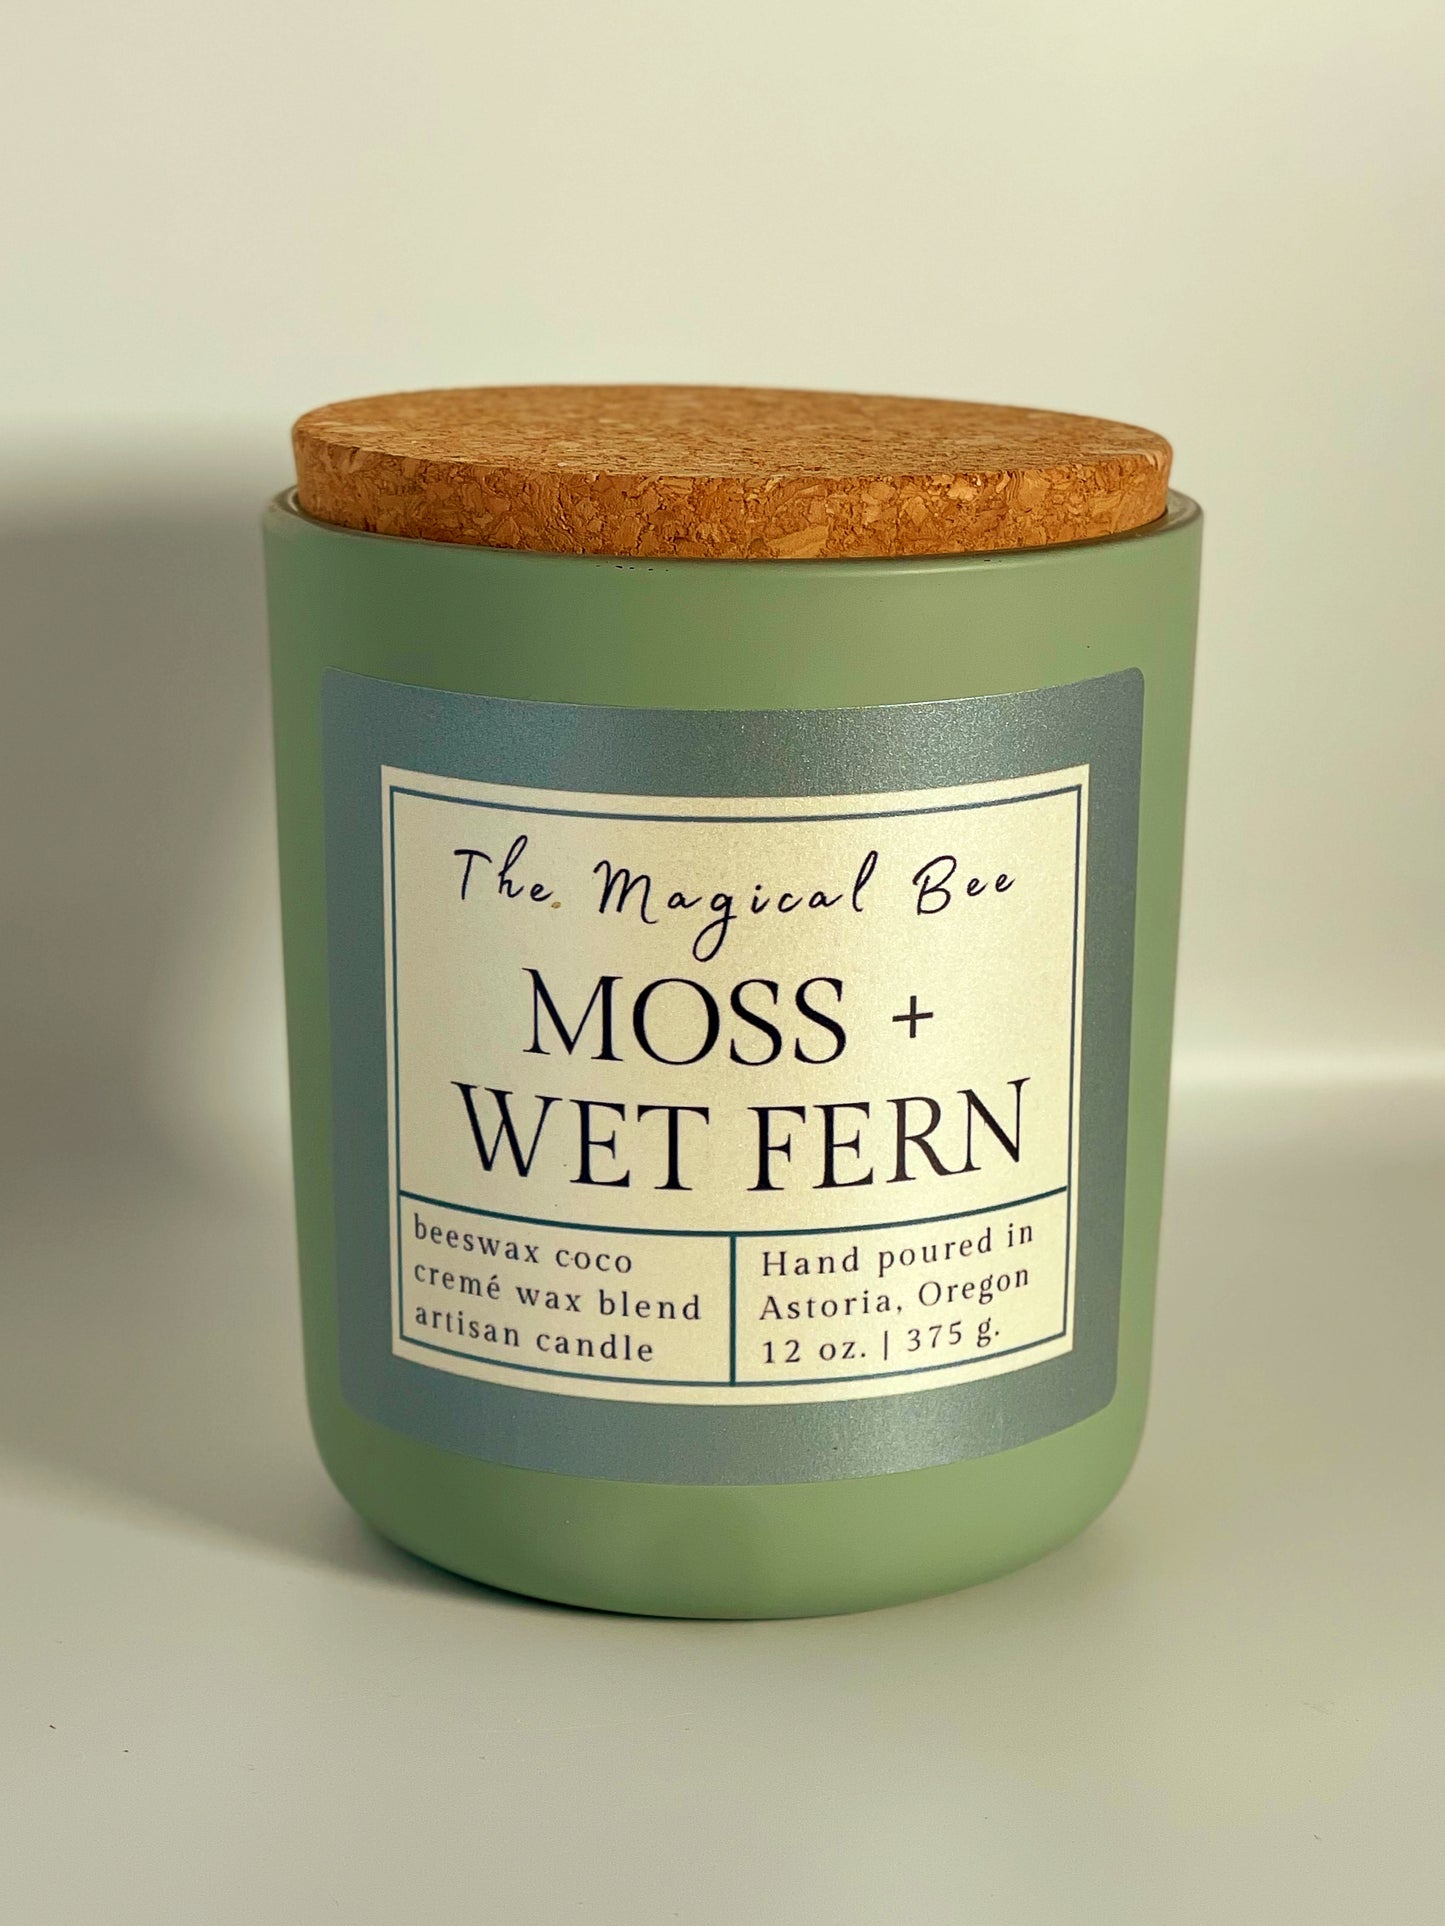 Moss + Wet Fern Candle